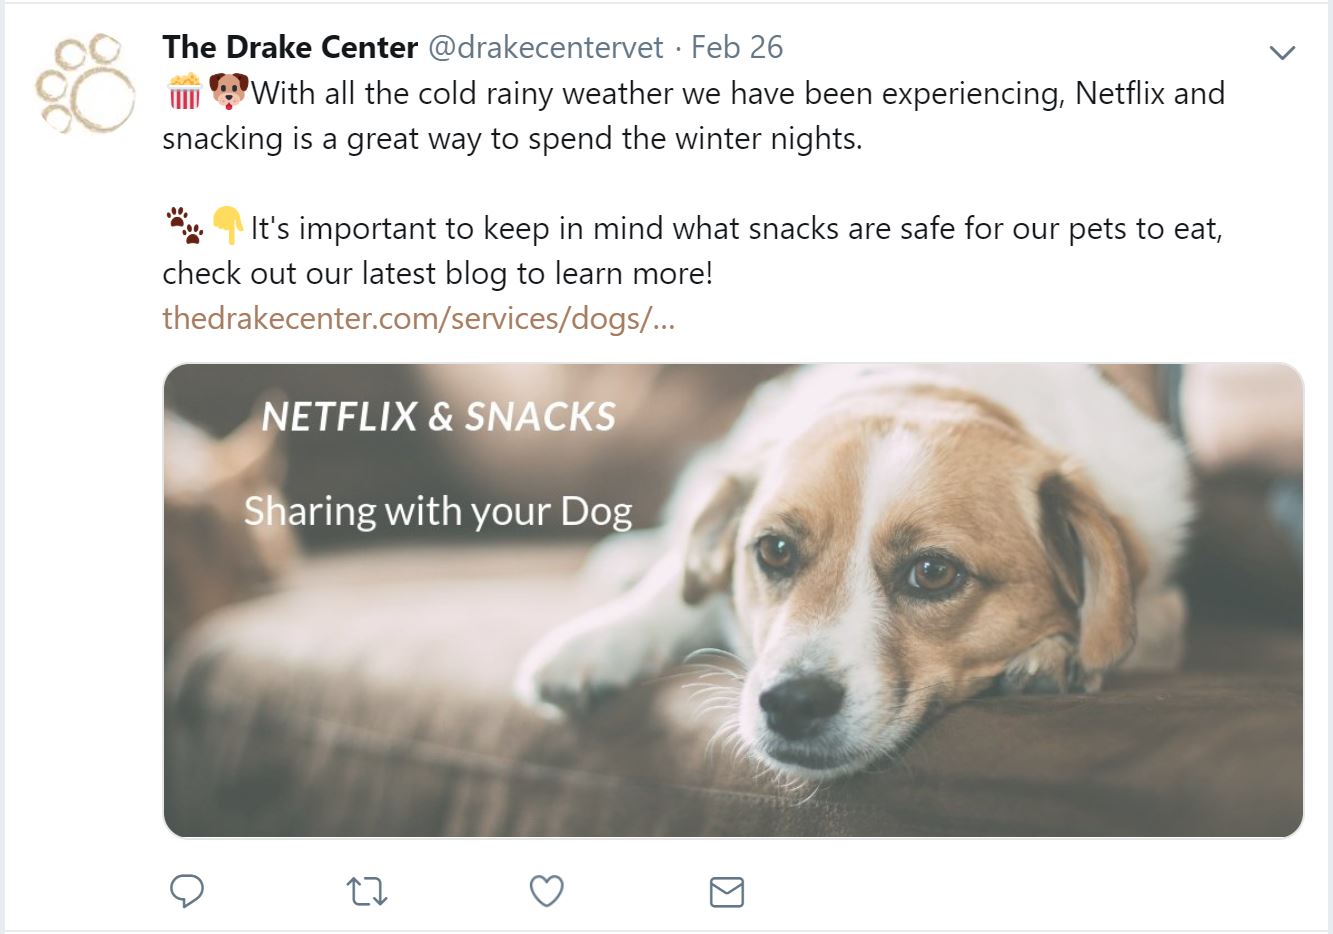 Screenshot of an educational tweet from The Drake Center